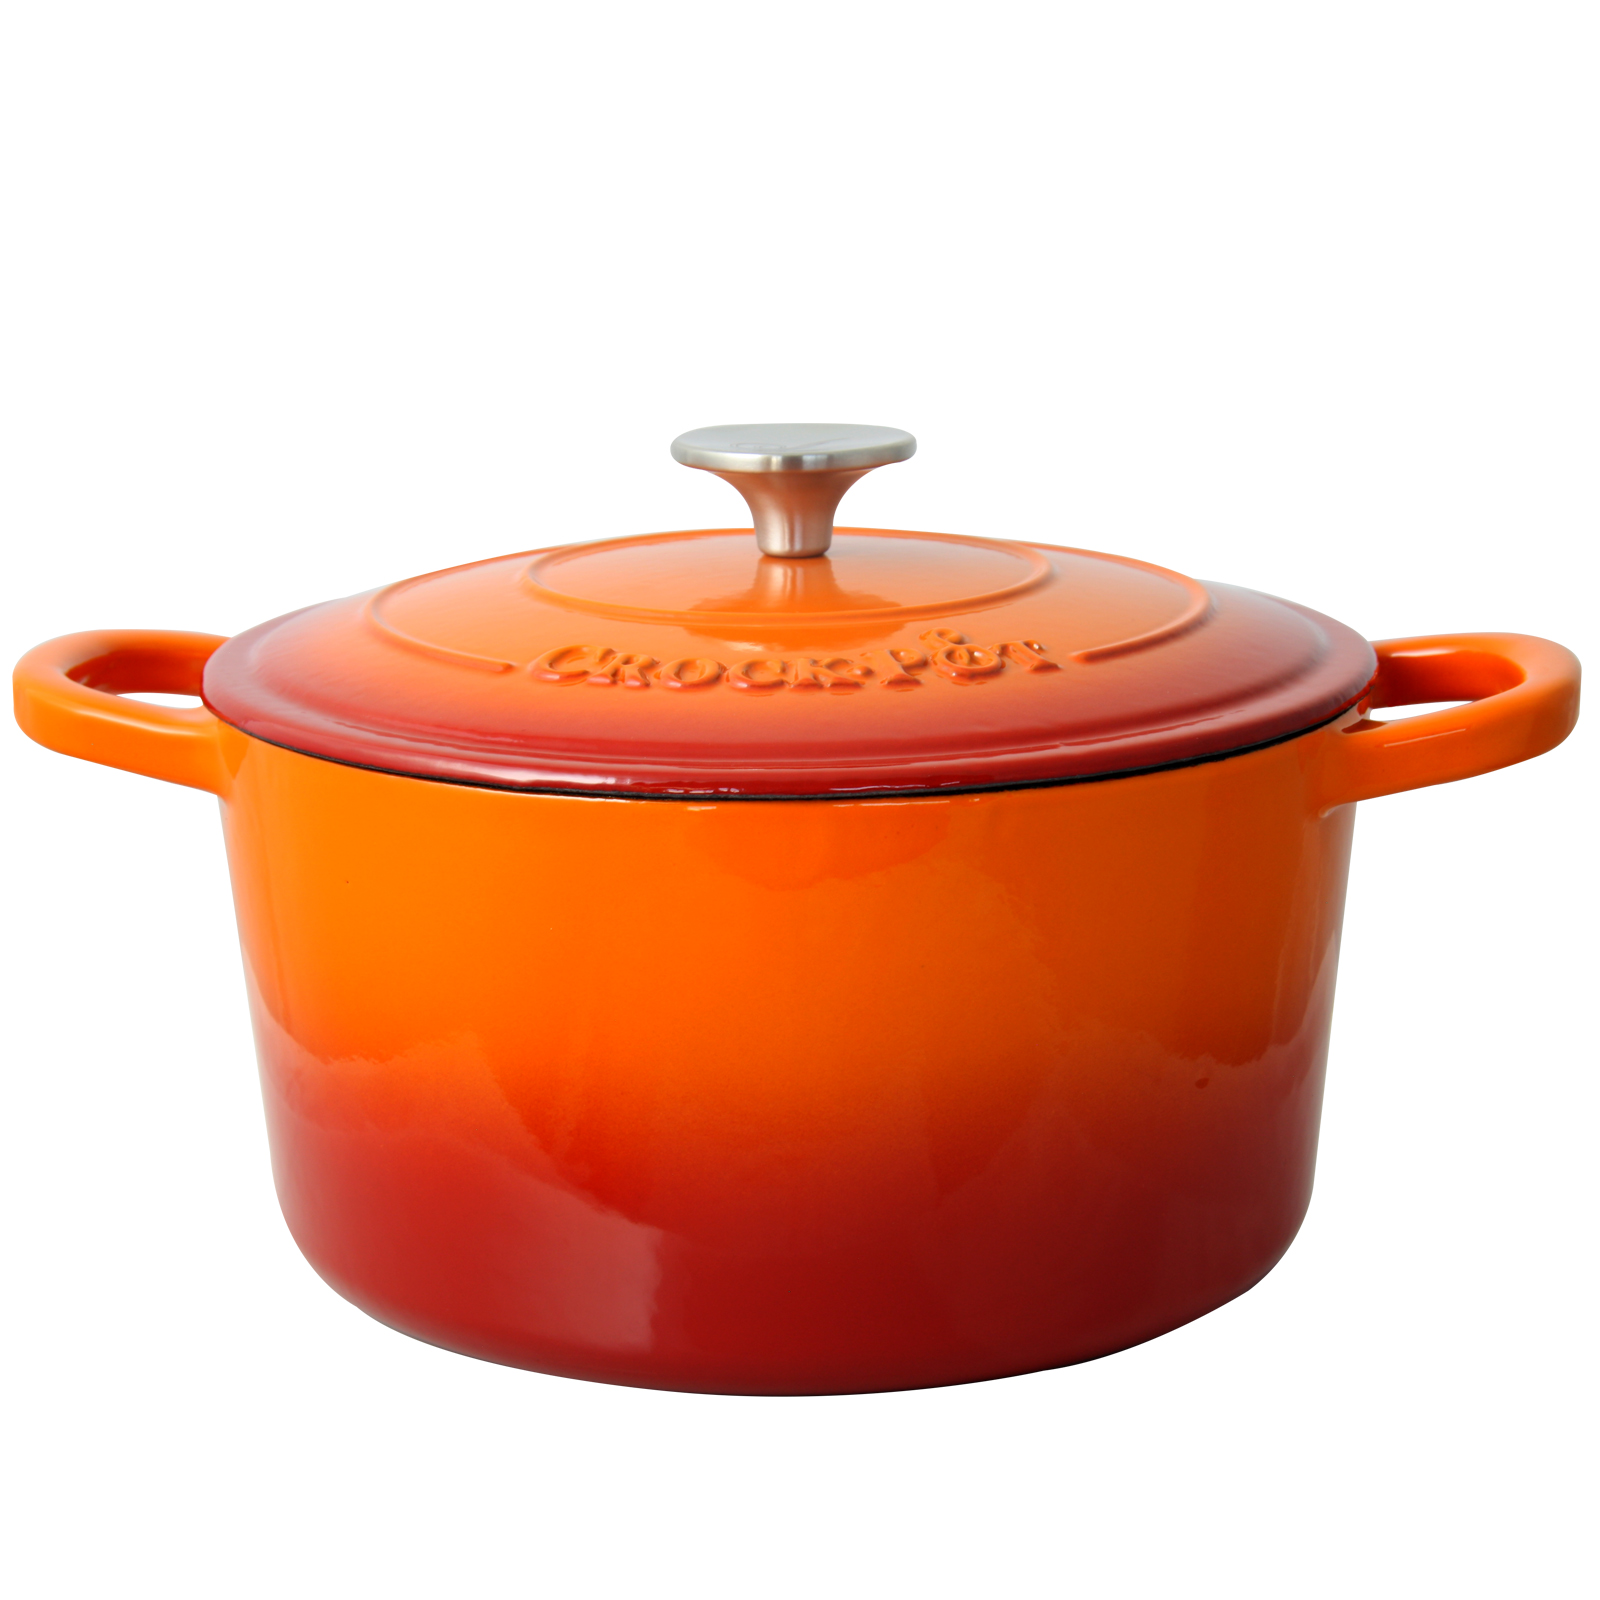 Crock-Pot. Artisan 5 Quart Round Enameled Cast Iron Dutch Oven in Sunset Orange